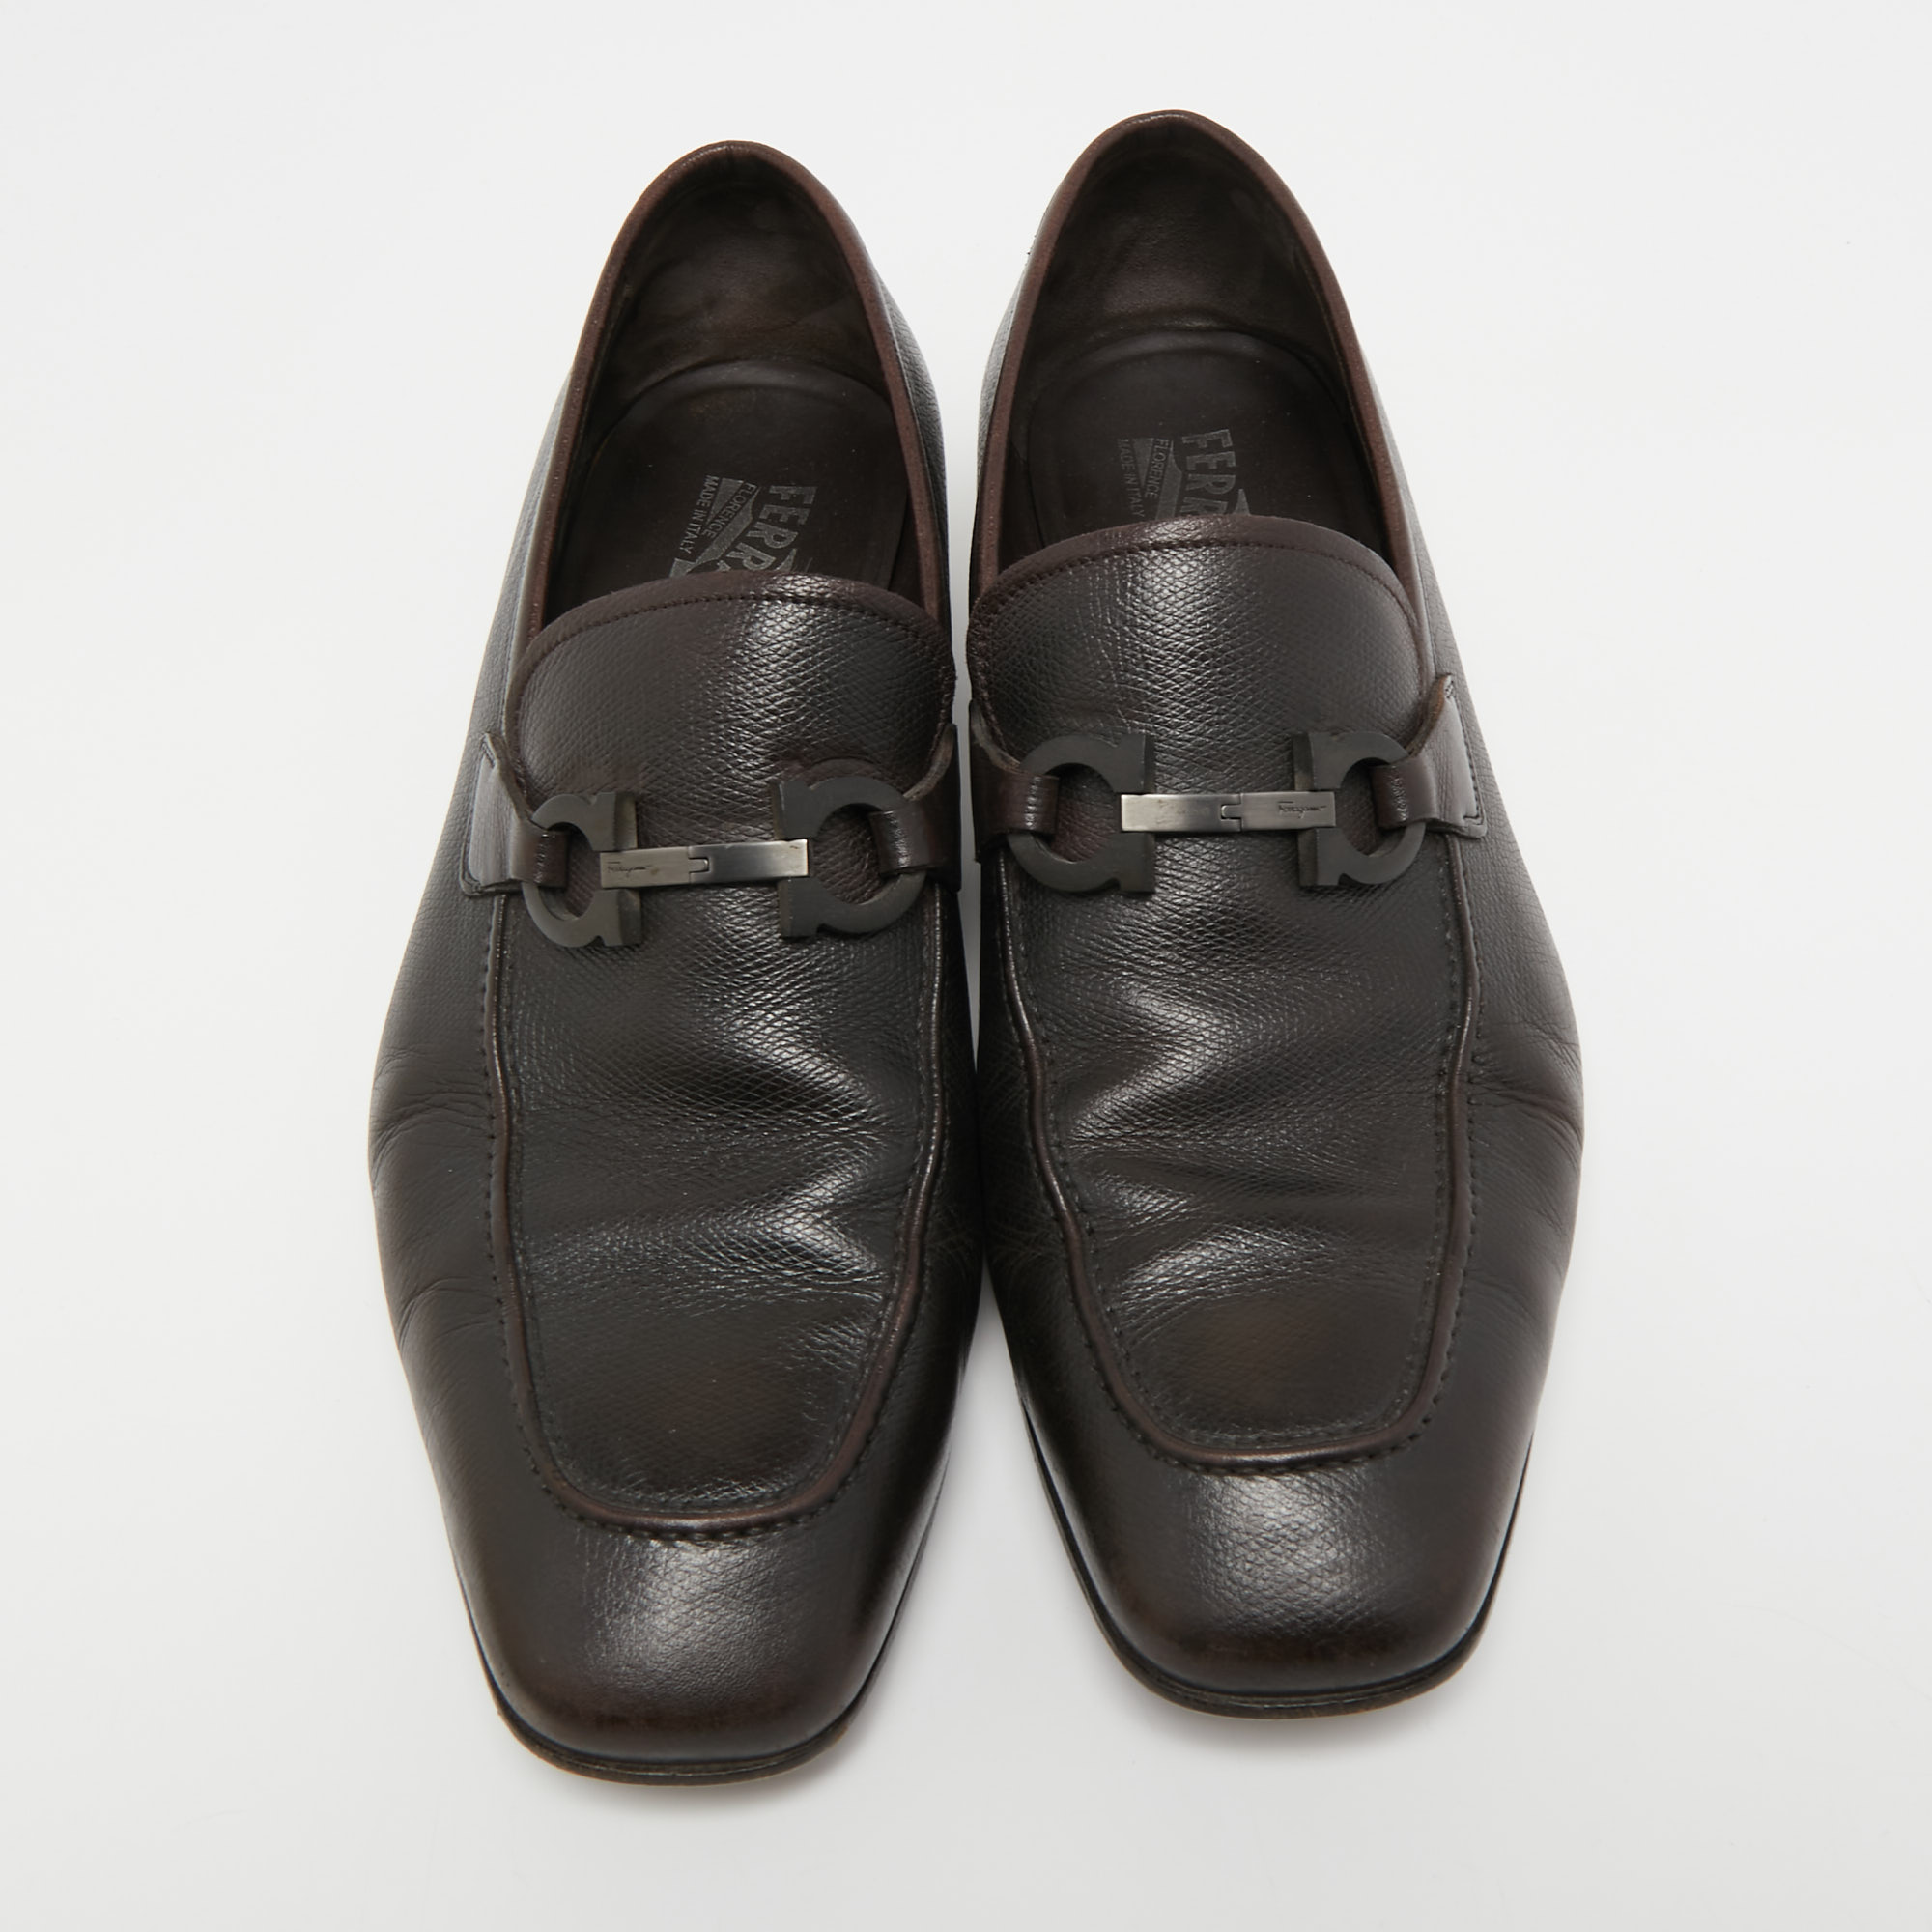 Salvatore Ferragamo Dark Brown Leather Gancini Bit Loafers Size 44.5